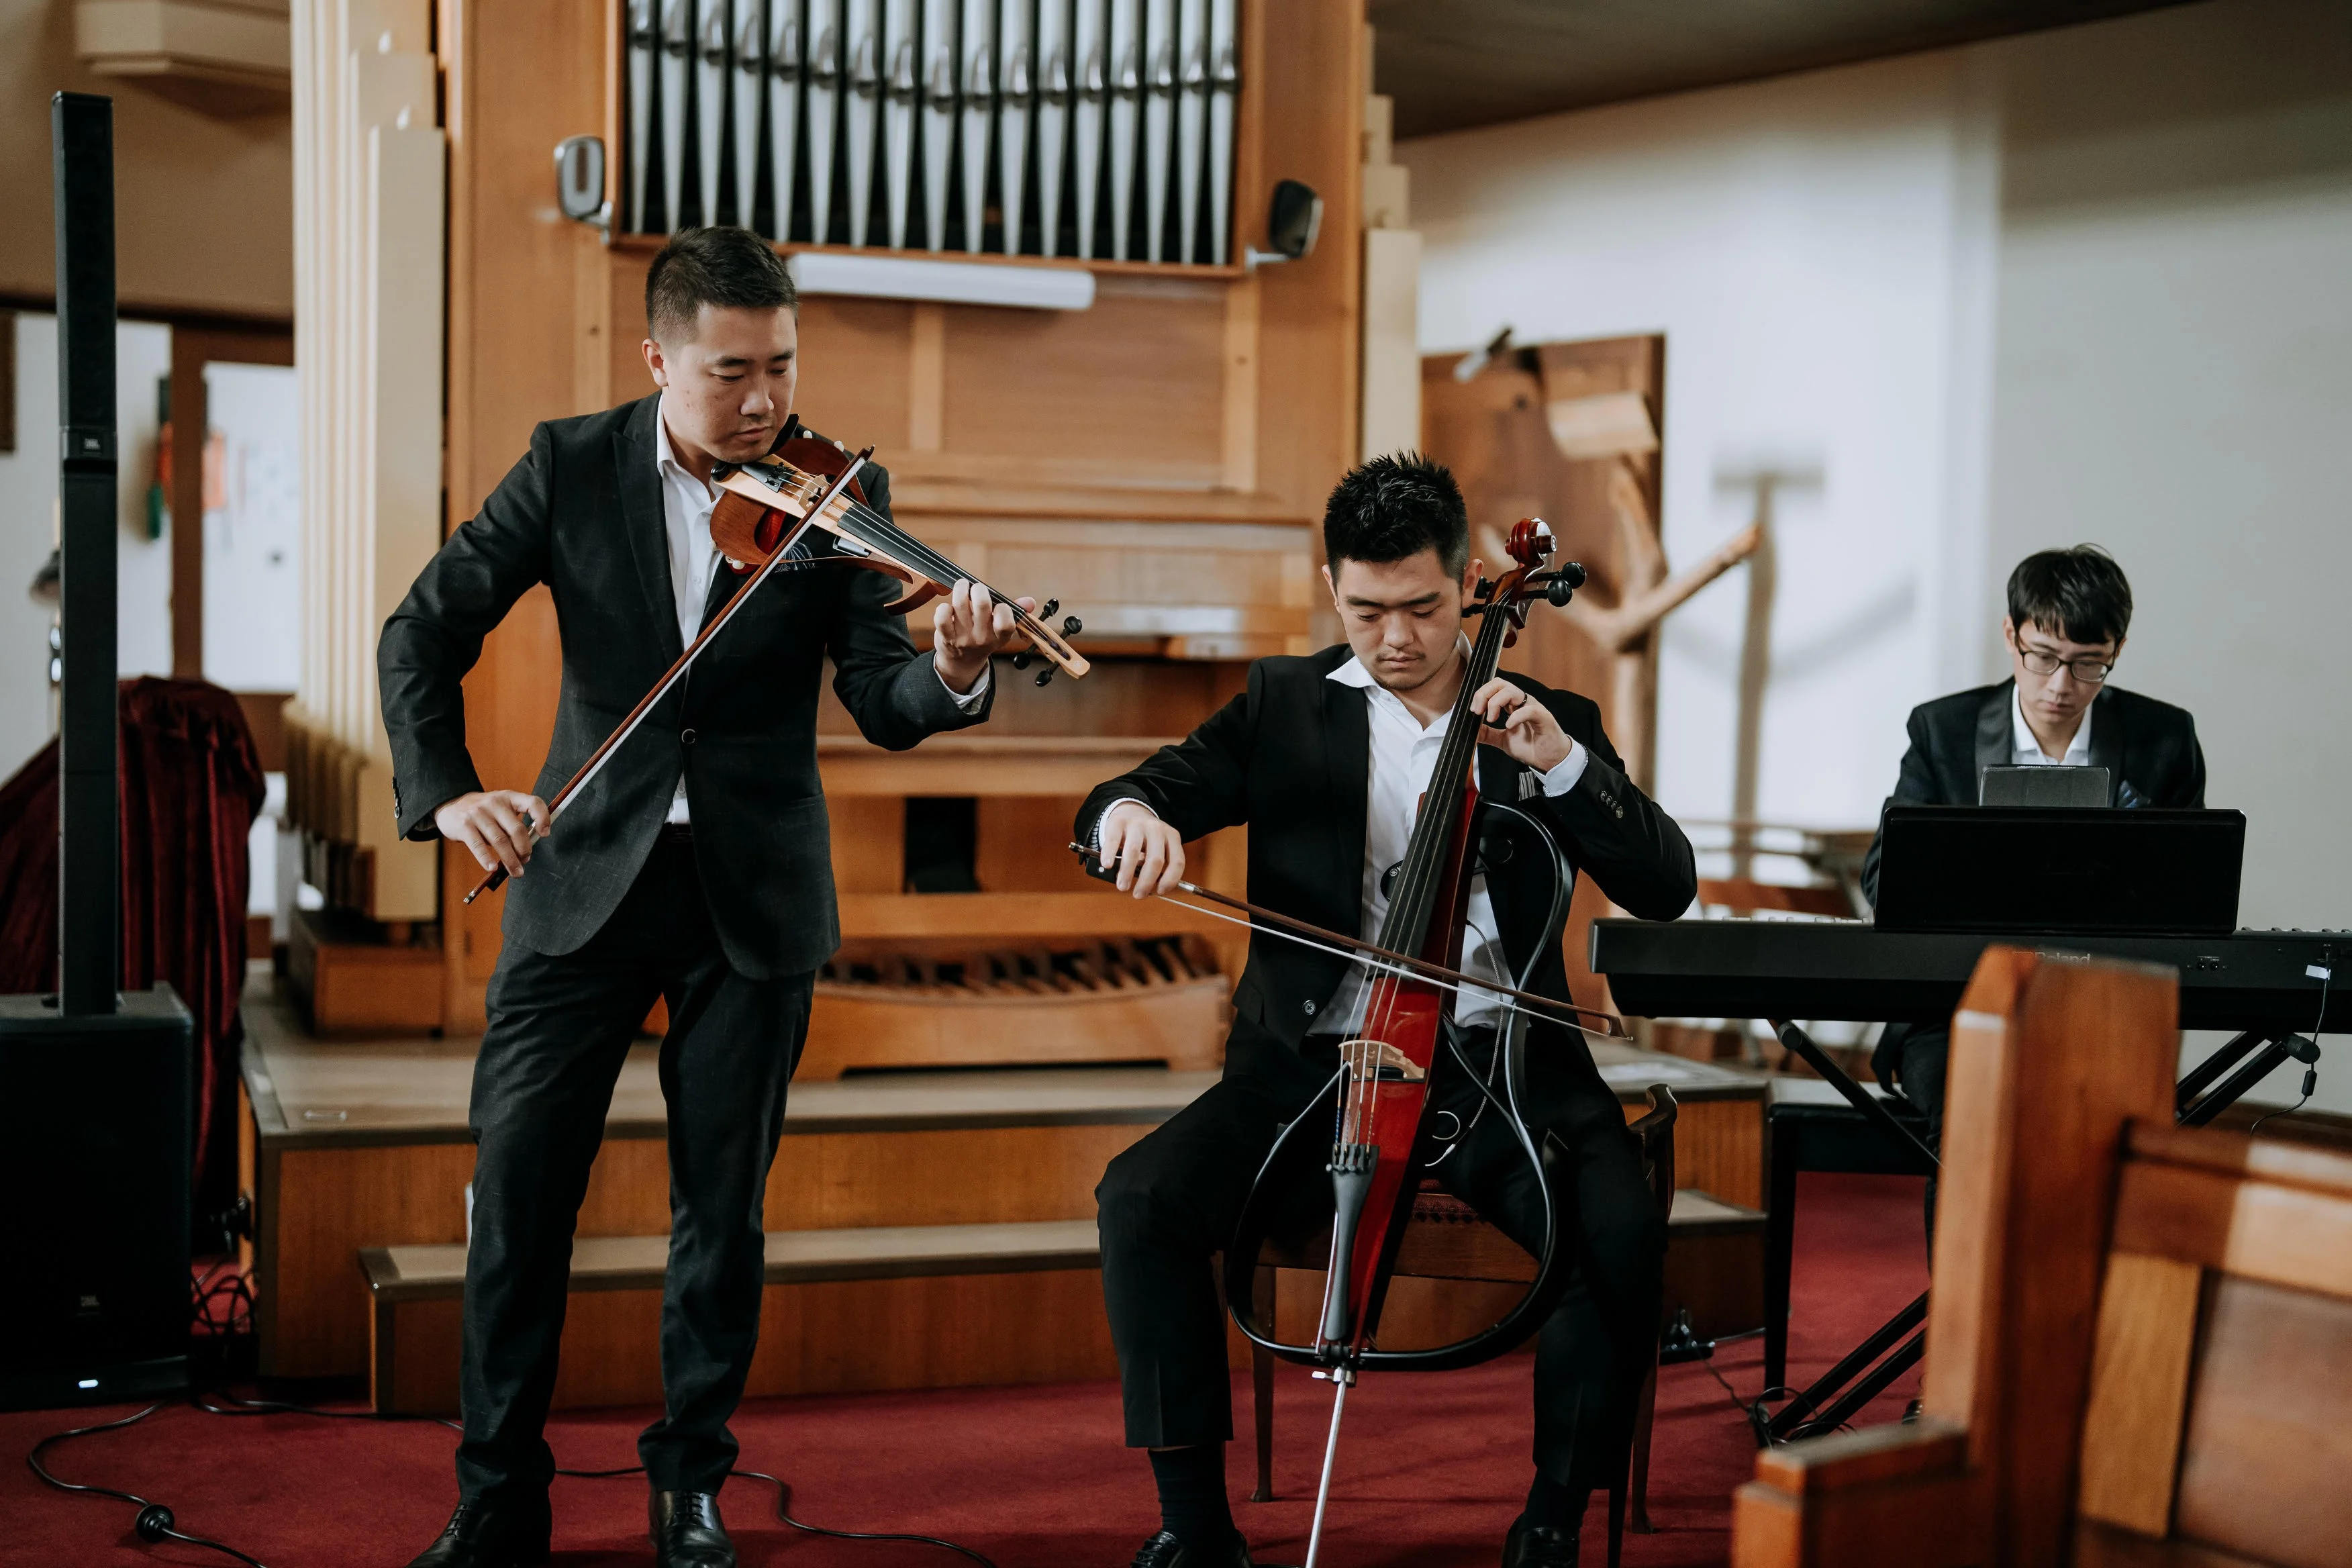 popular-string-quartets-ensembles-violin-players-in-australia-darioviolin-and-double-show-entertainment-melbourne-victoria